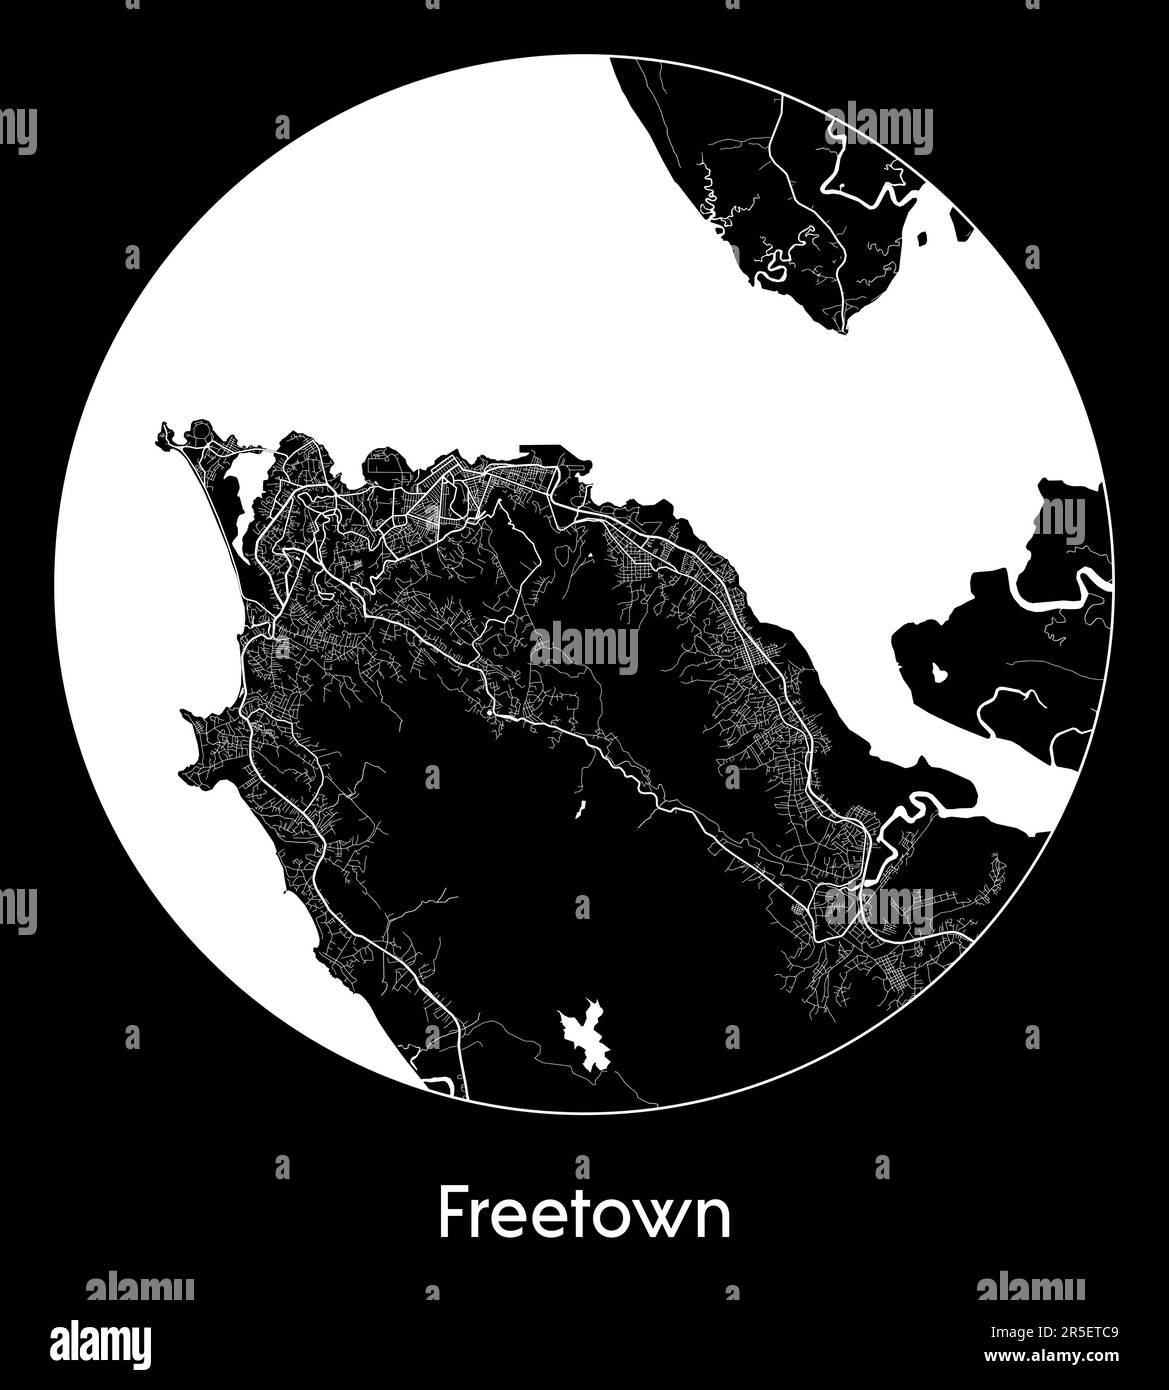 City Map Freetown Sierra Leone Africa vector illustration Stock Vector